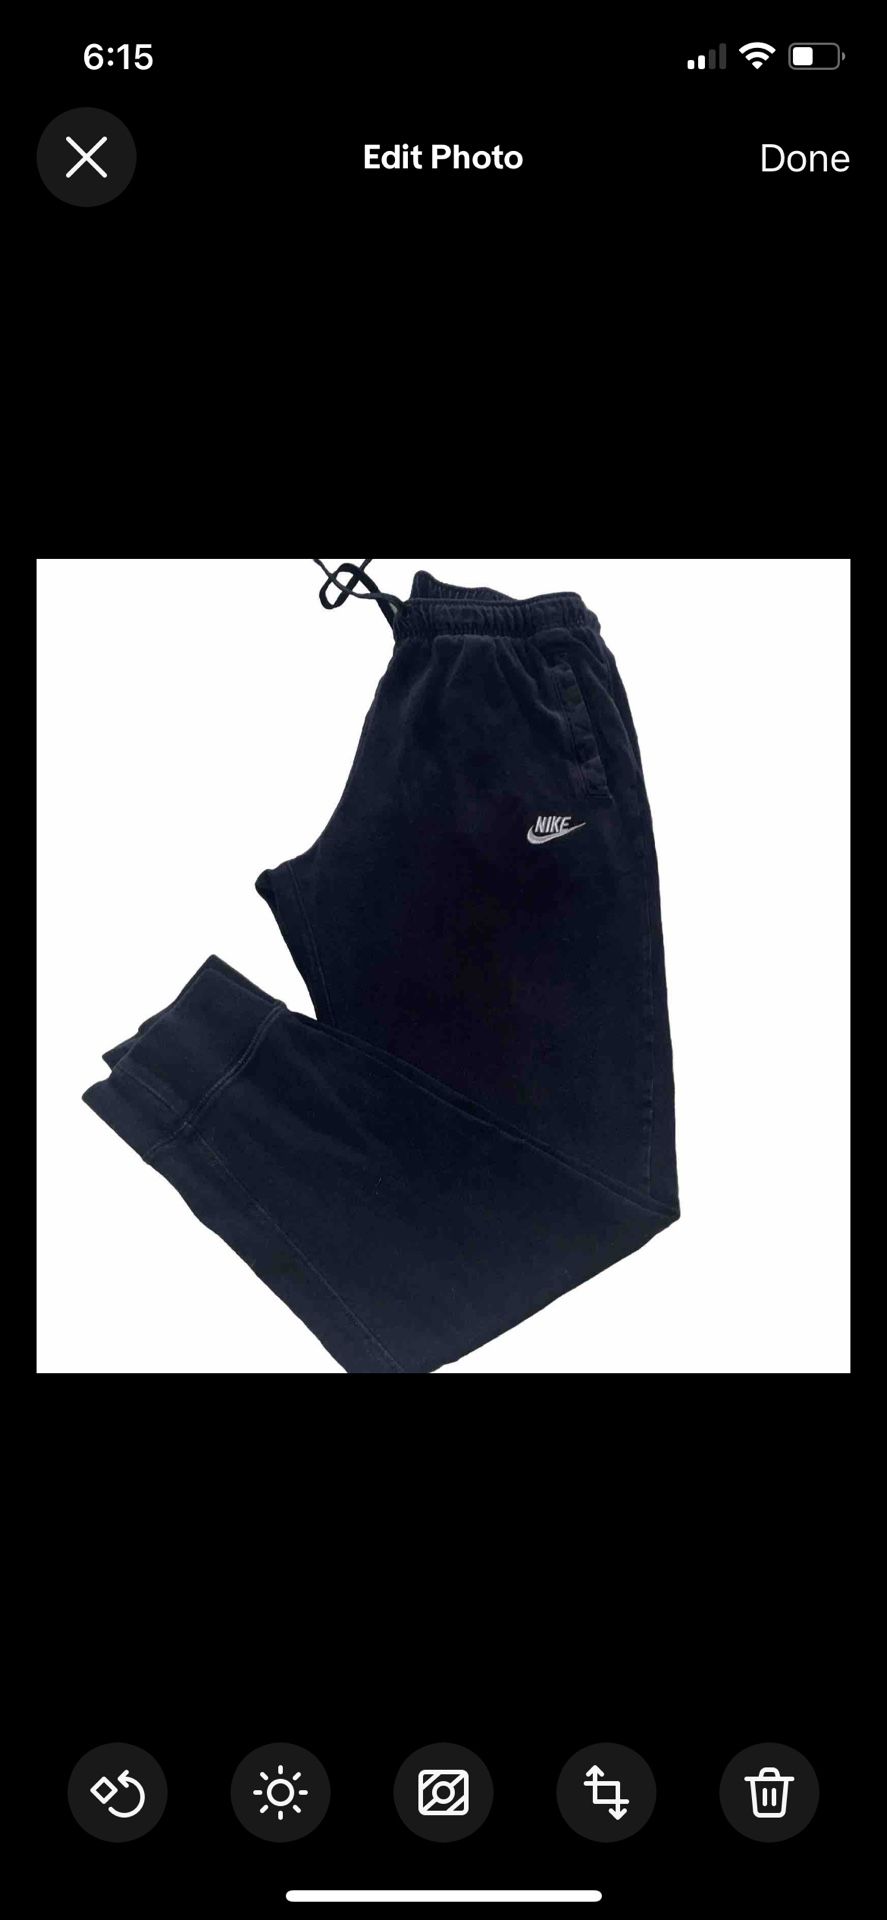 Nike Sportswear Club Jersey Joggers Pants Black BV2762-010 - Mens Size M  